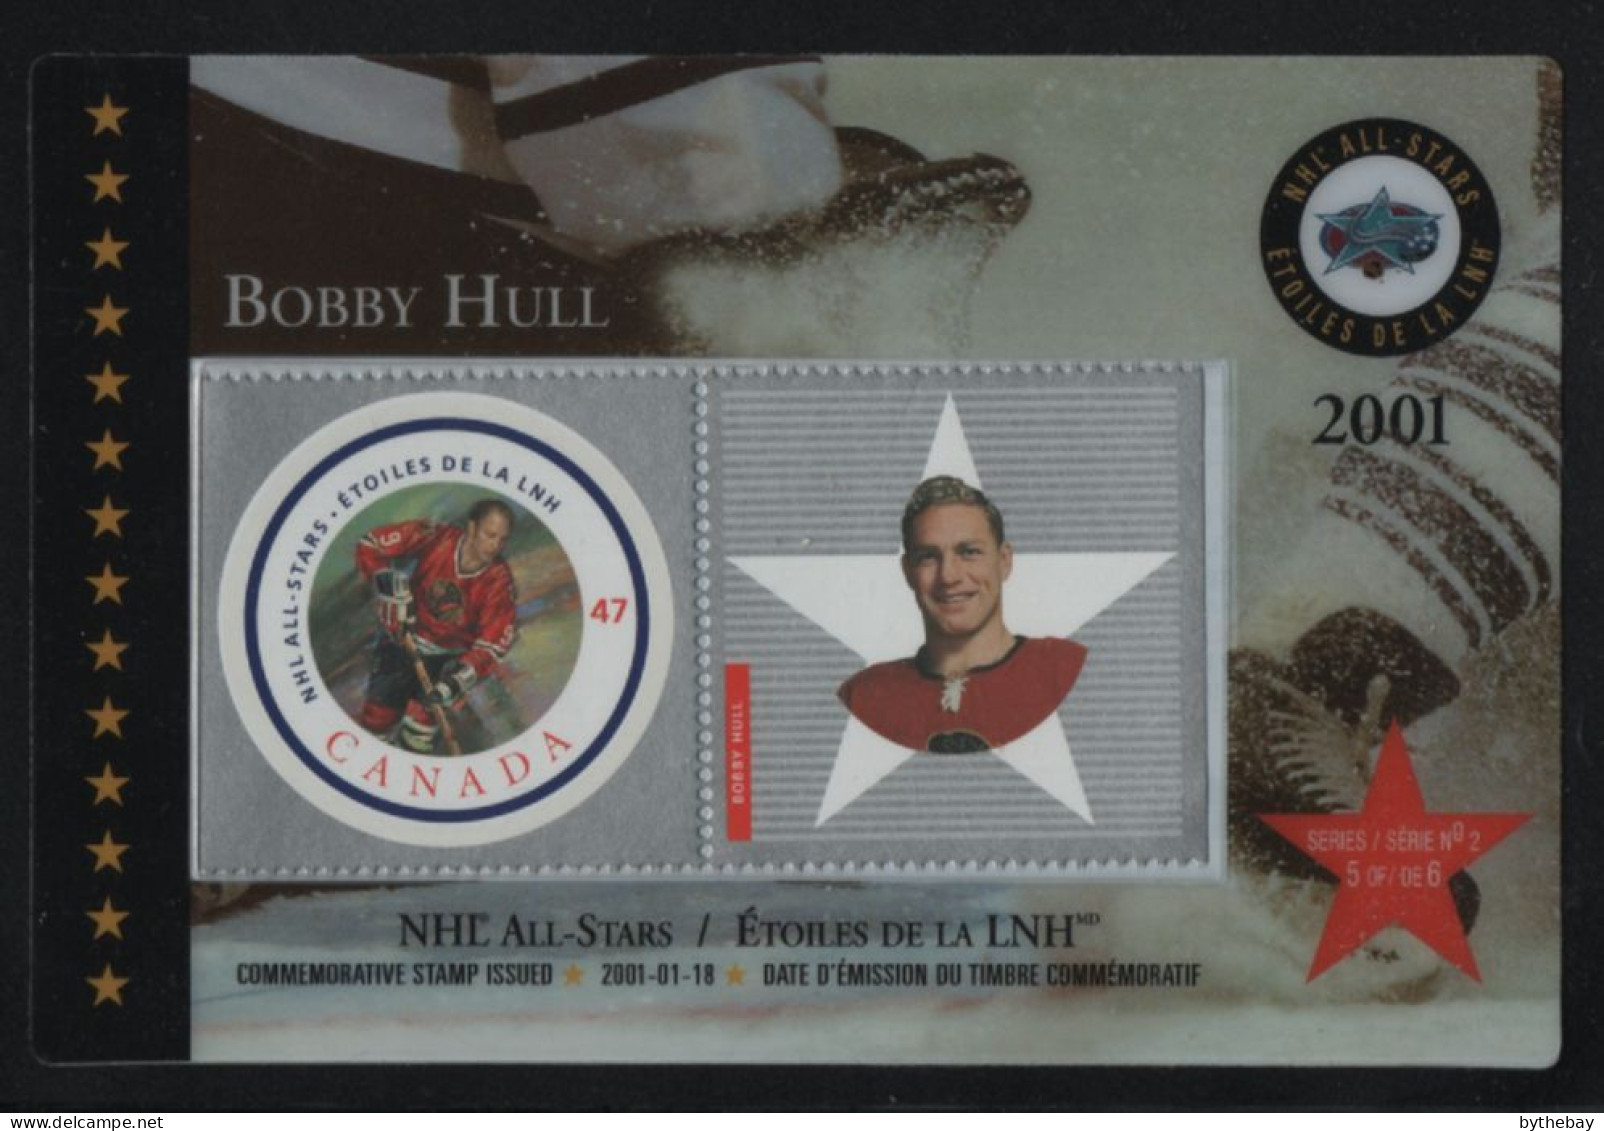 Canada 2001 Stamp Card Sc 1885e 47c Bobby Hull - Annuali / Merchandise